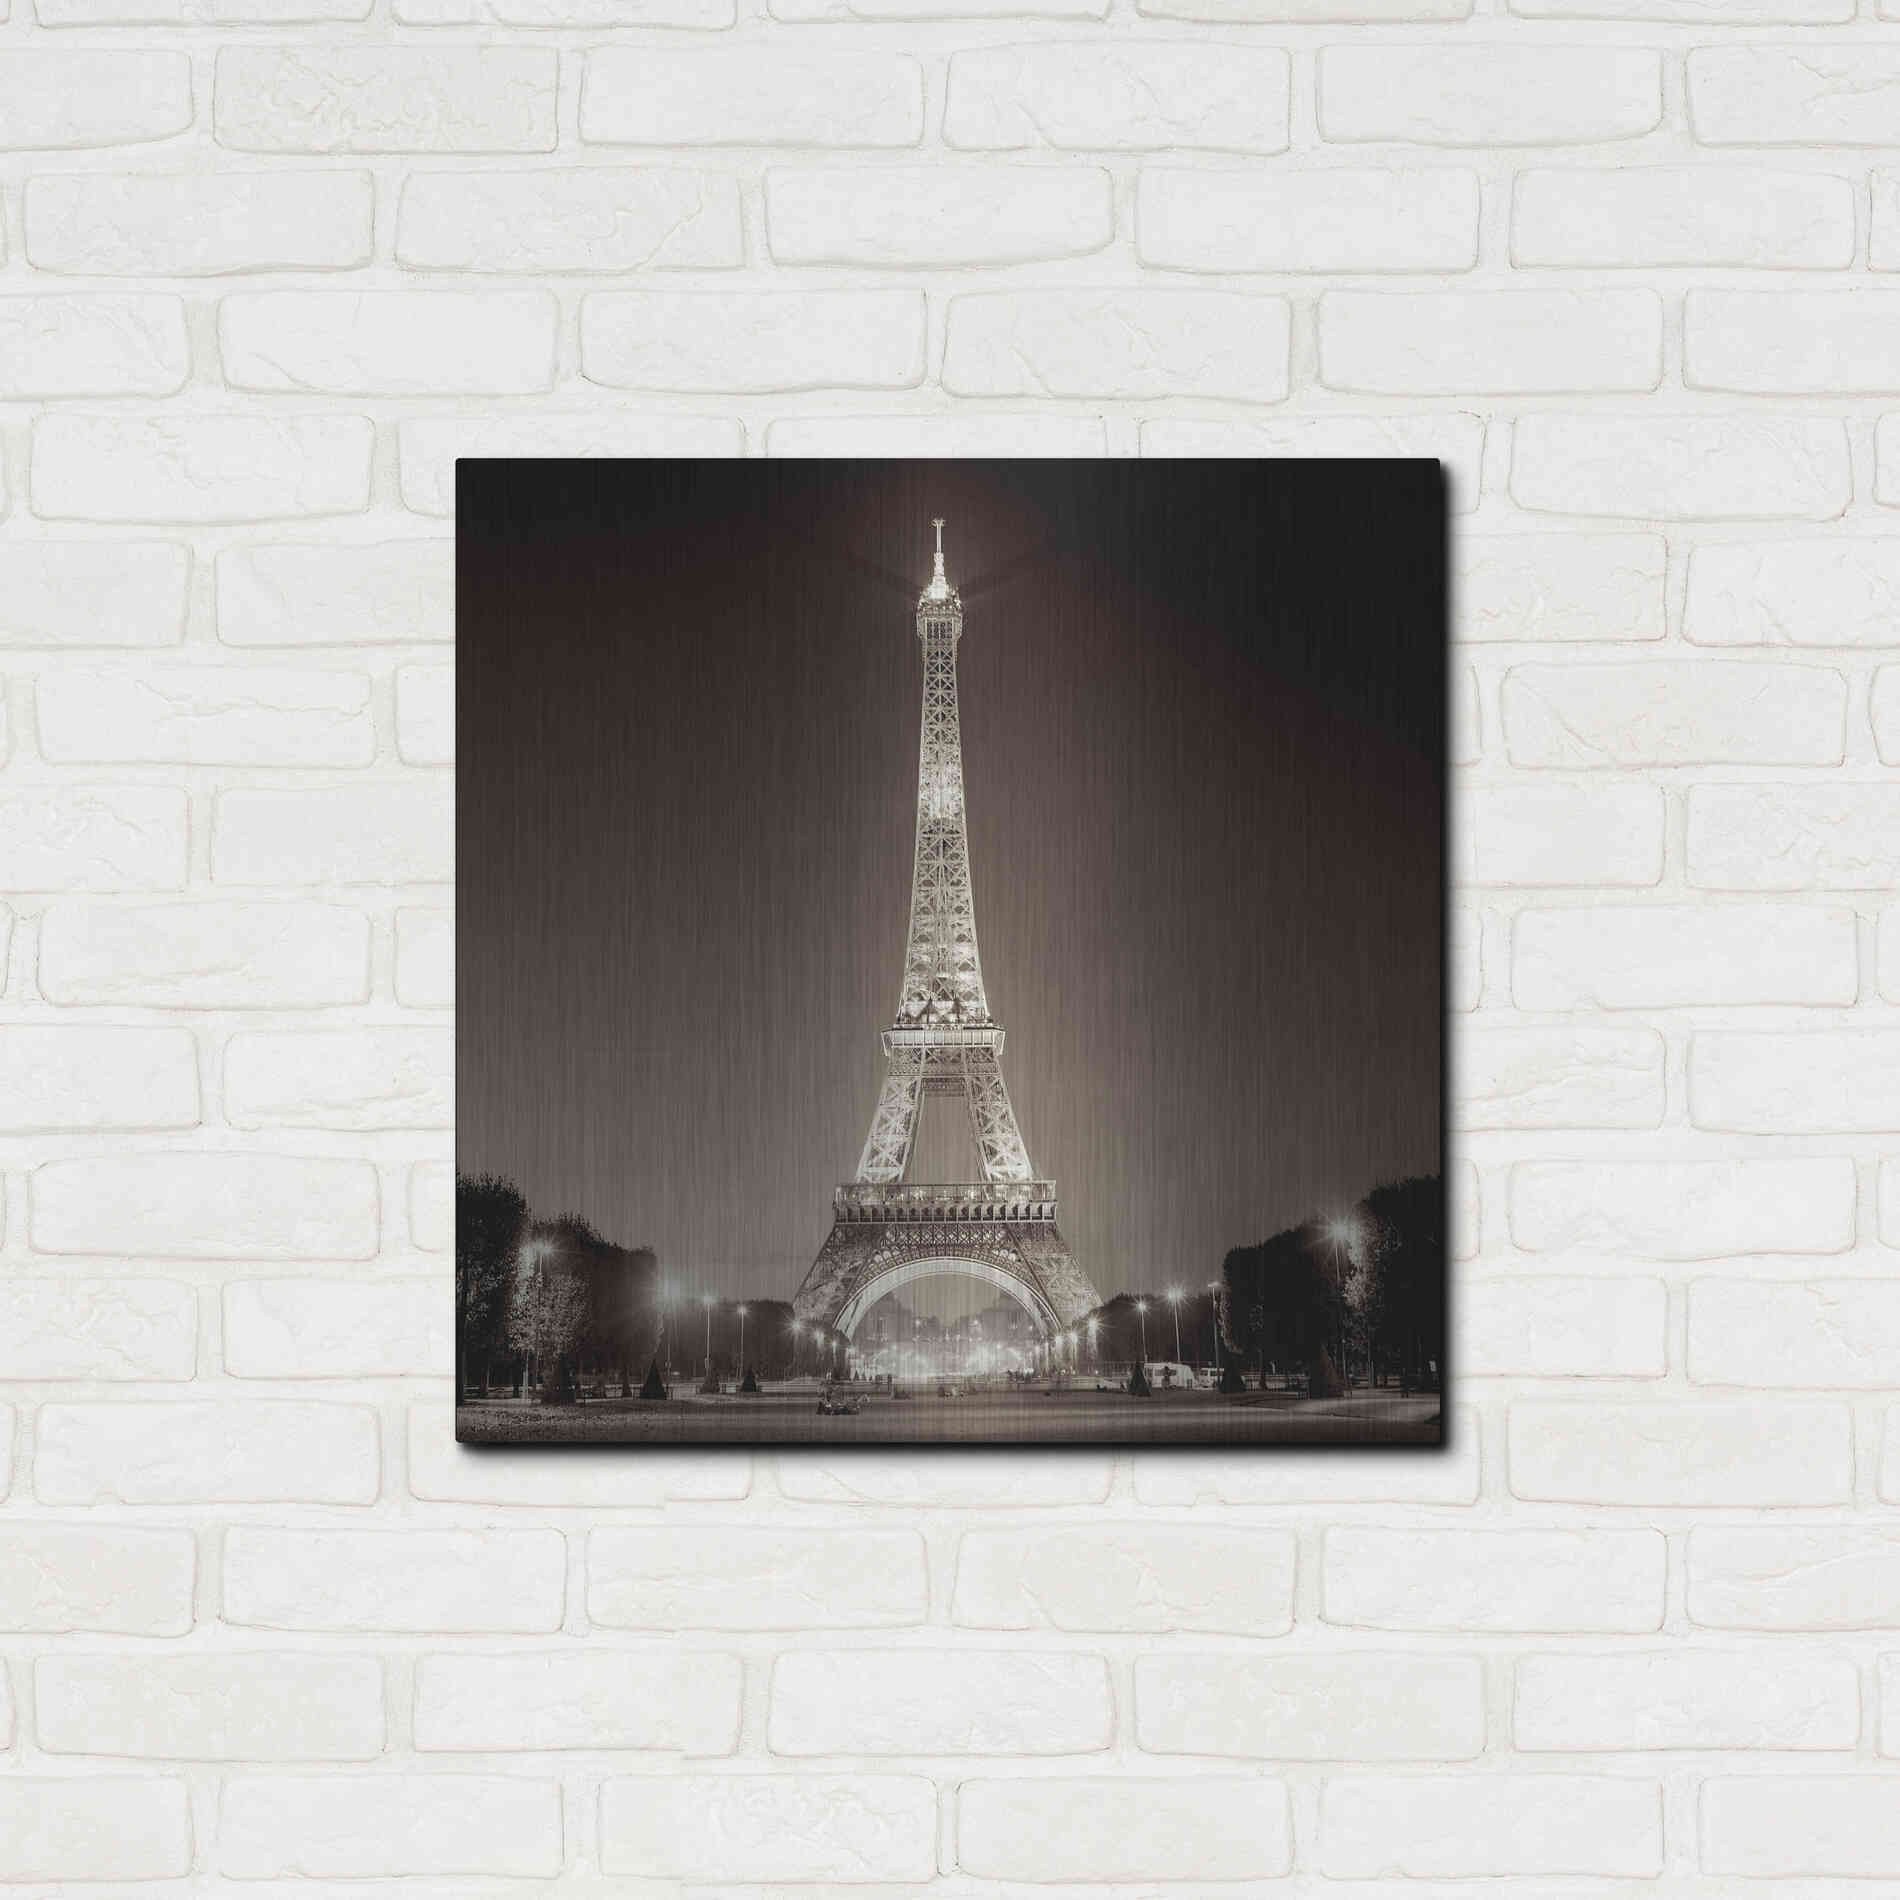 Luxe Metal Art 'Tour Eiffel 1' by Alan Blaustein Metal Wall Art,24x24